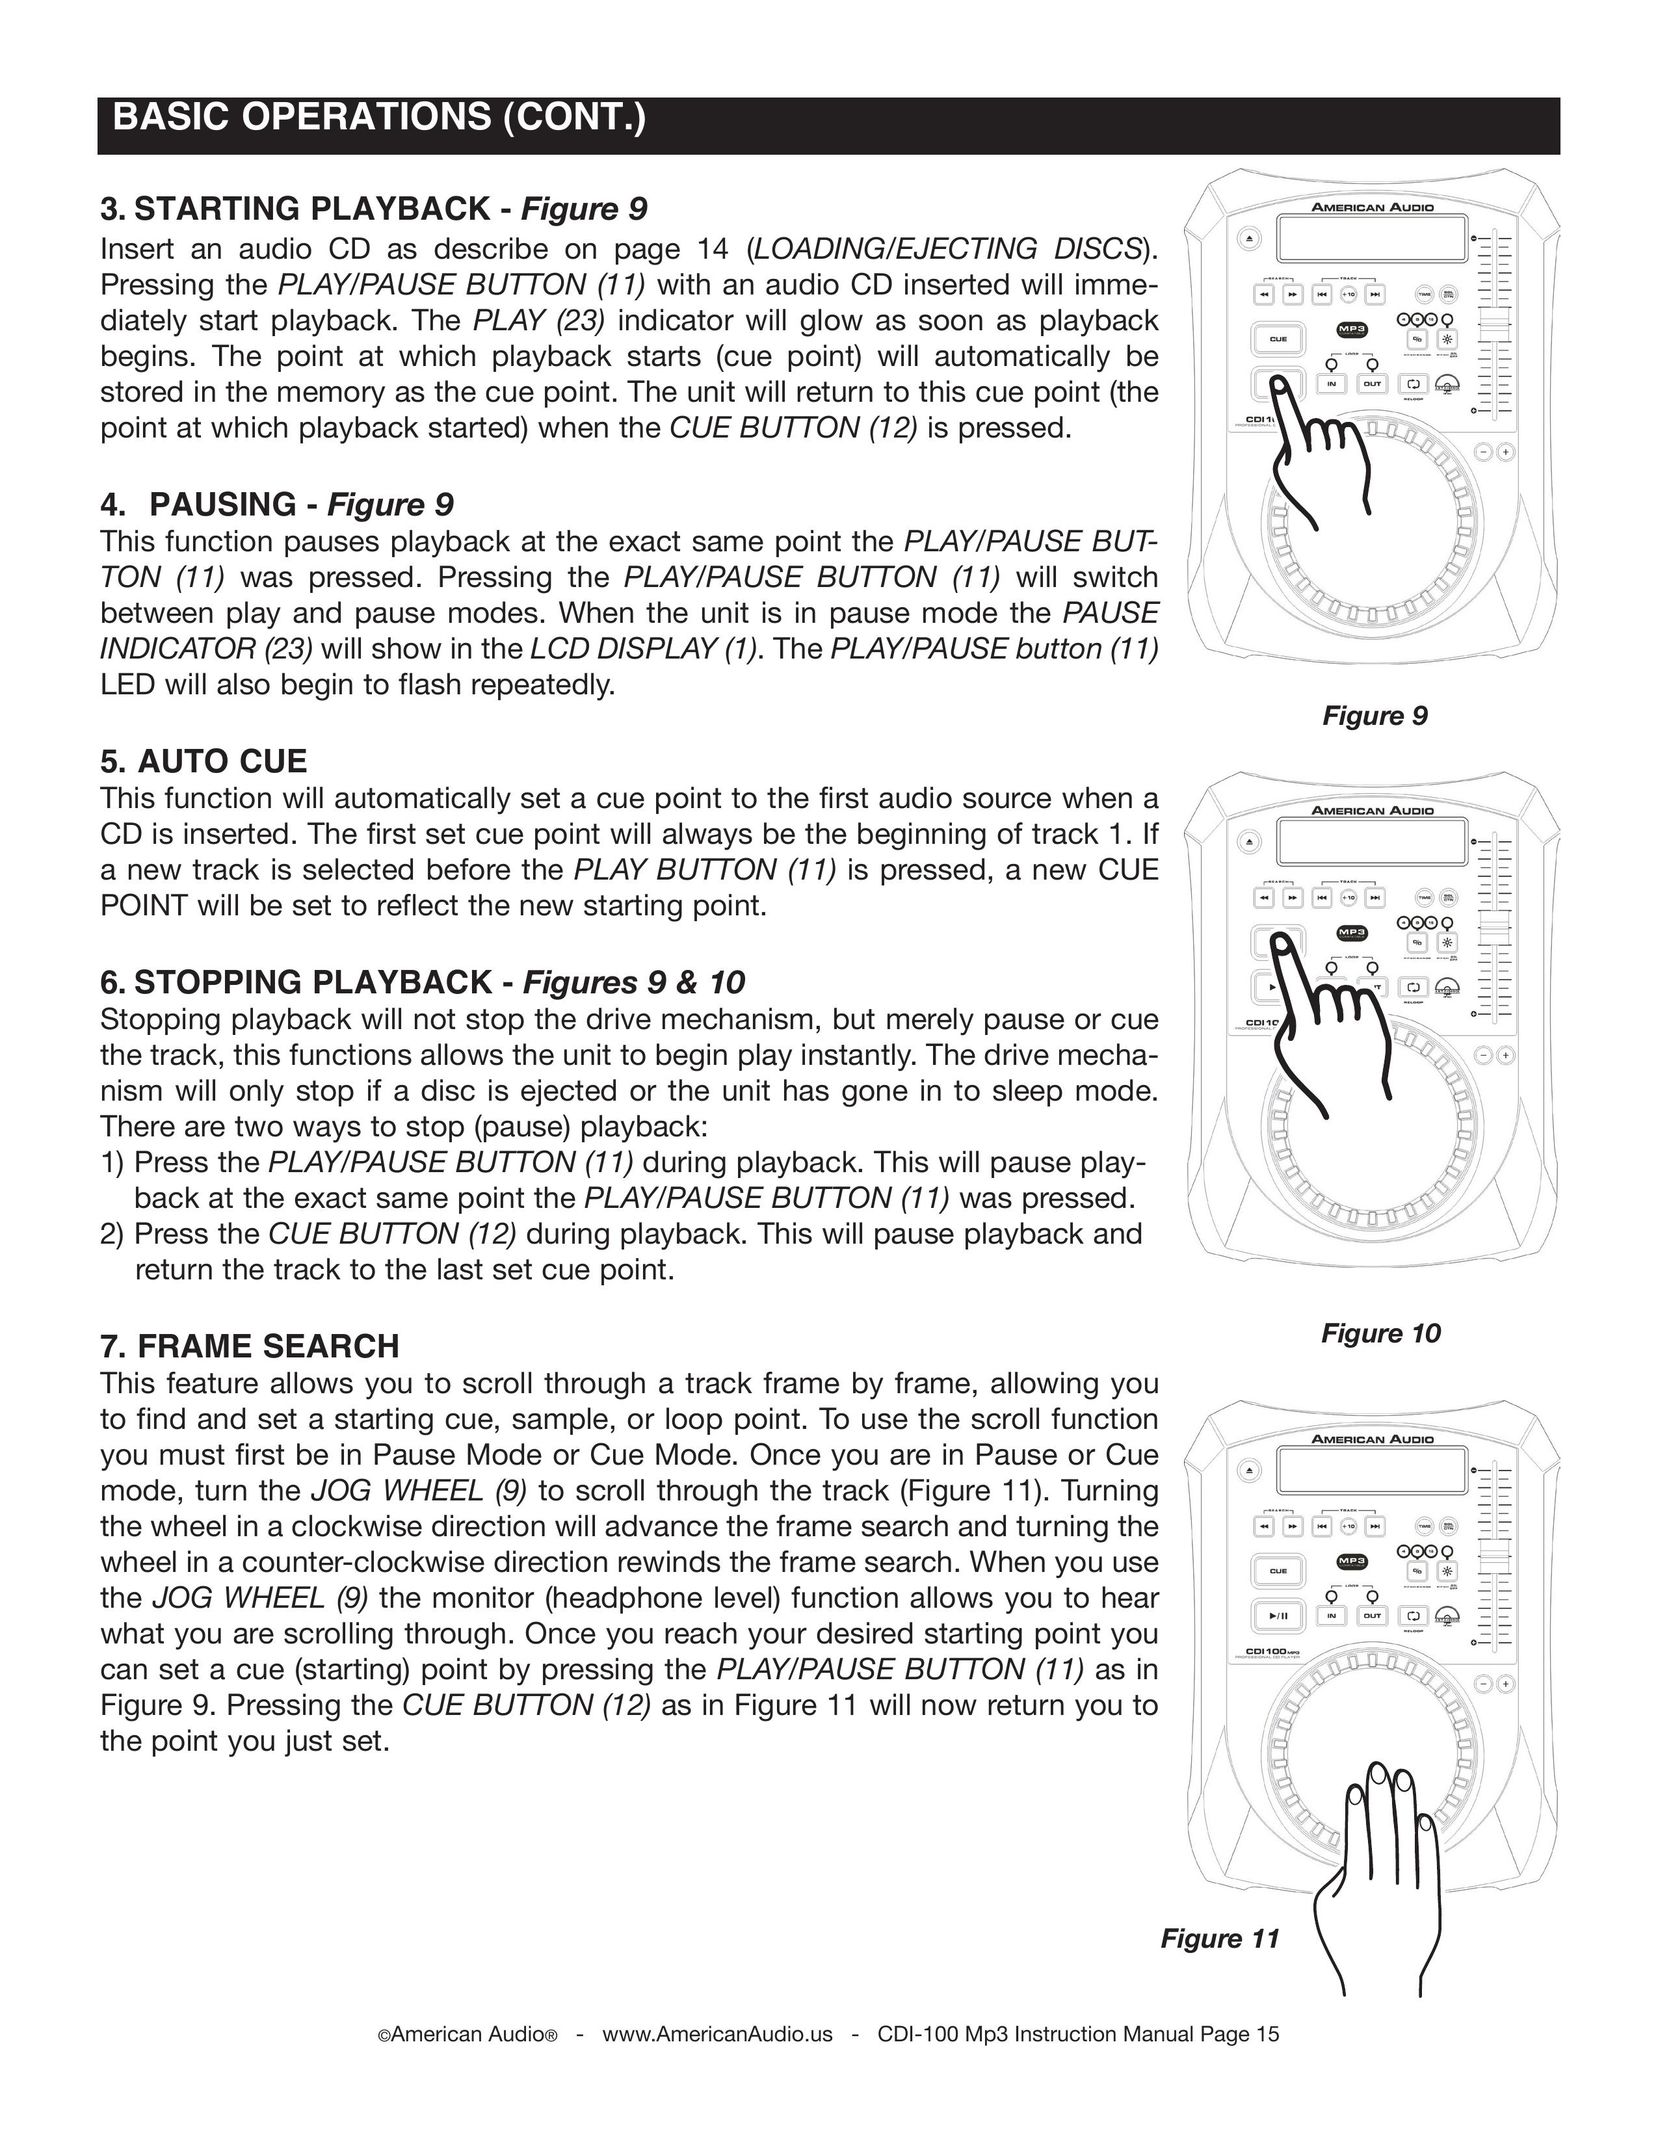 American Audio CDI-100 CD Player User Manual (Page 15)